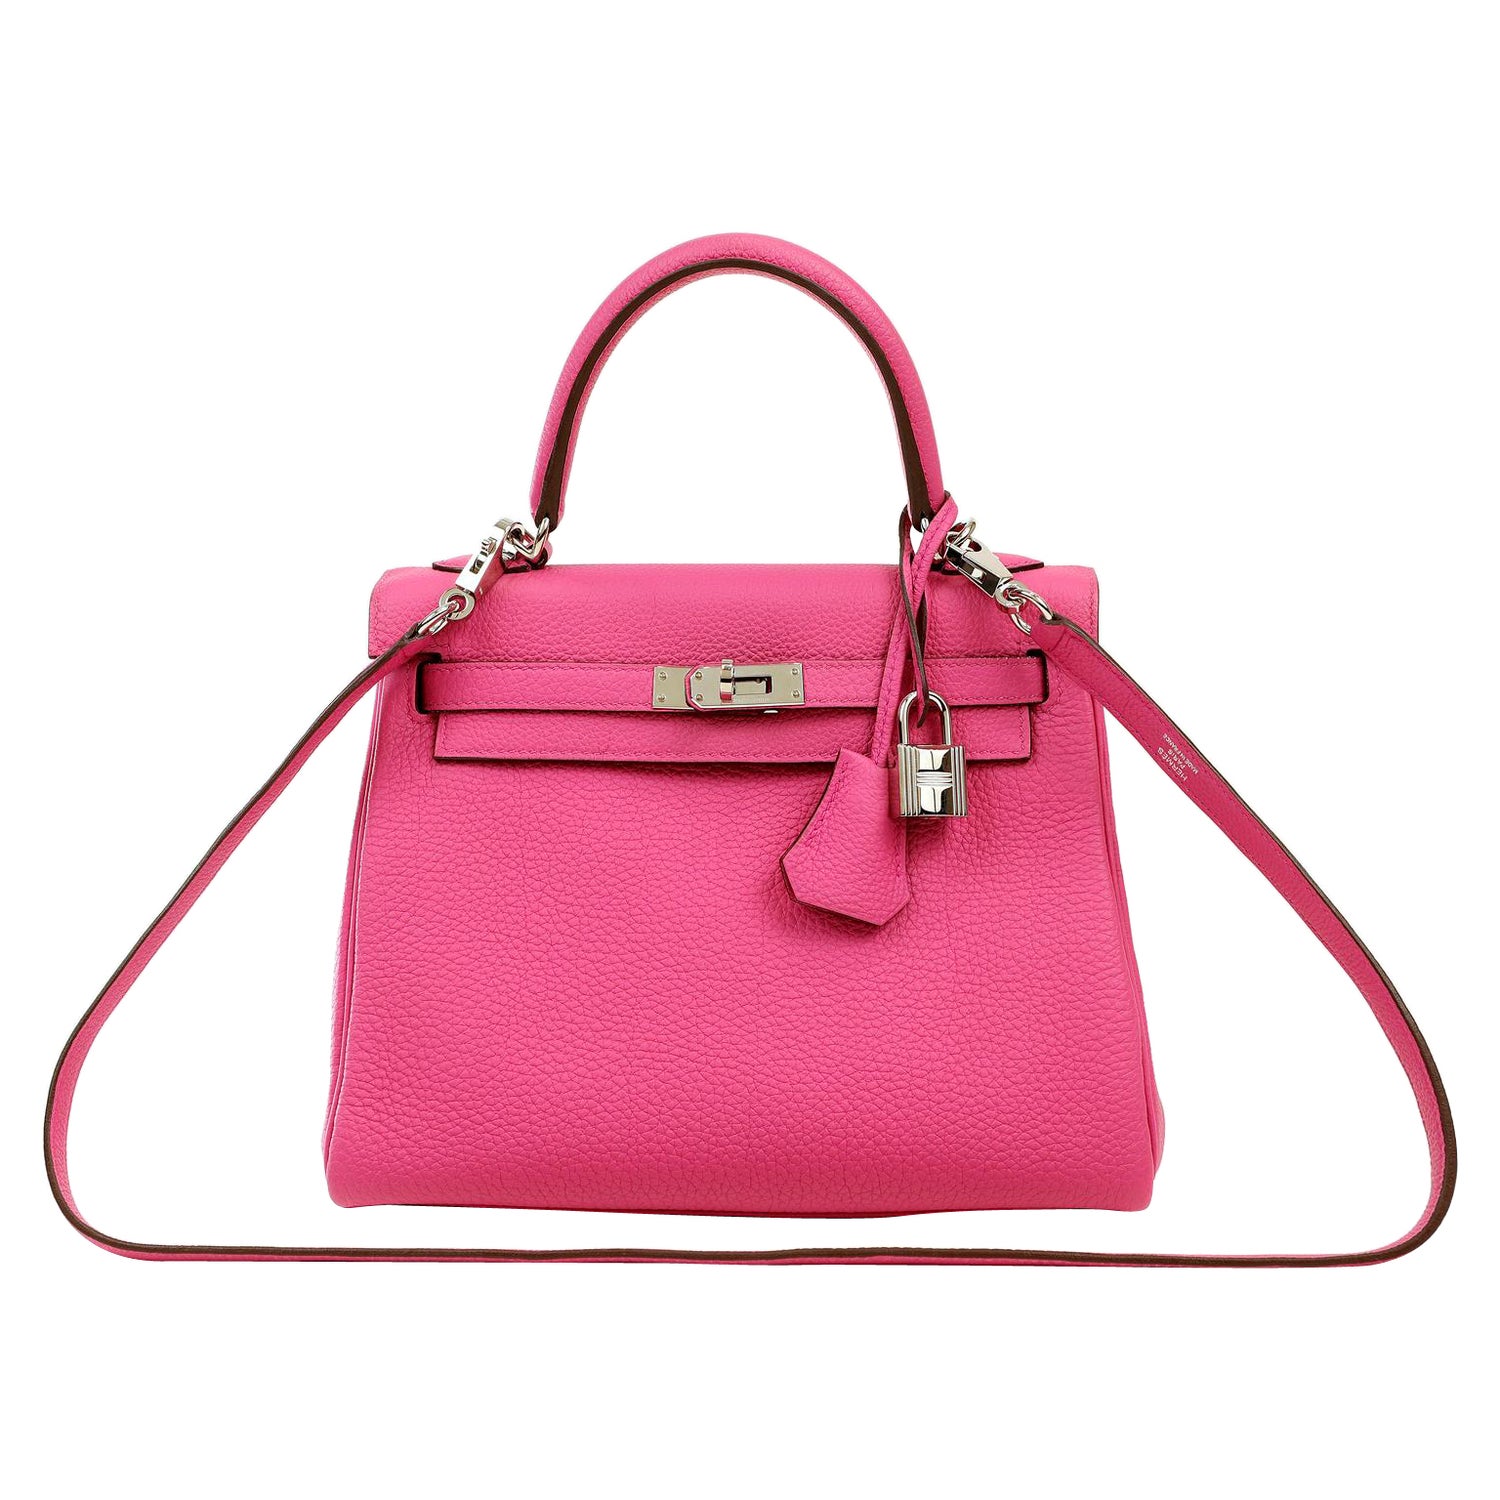 Hermes Birkin Sakura Pink - For Sale on 1stDibs